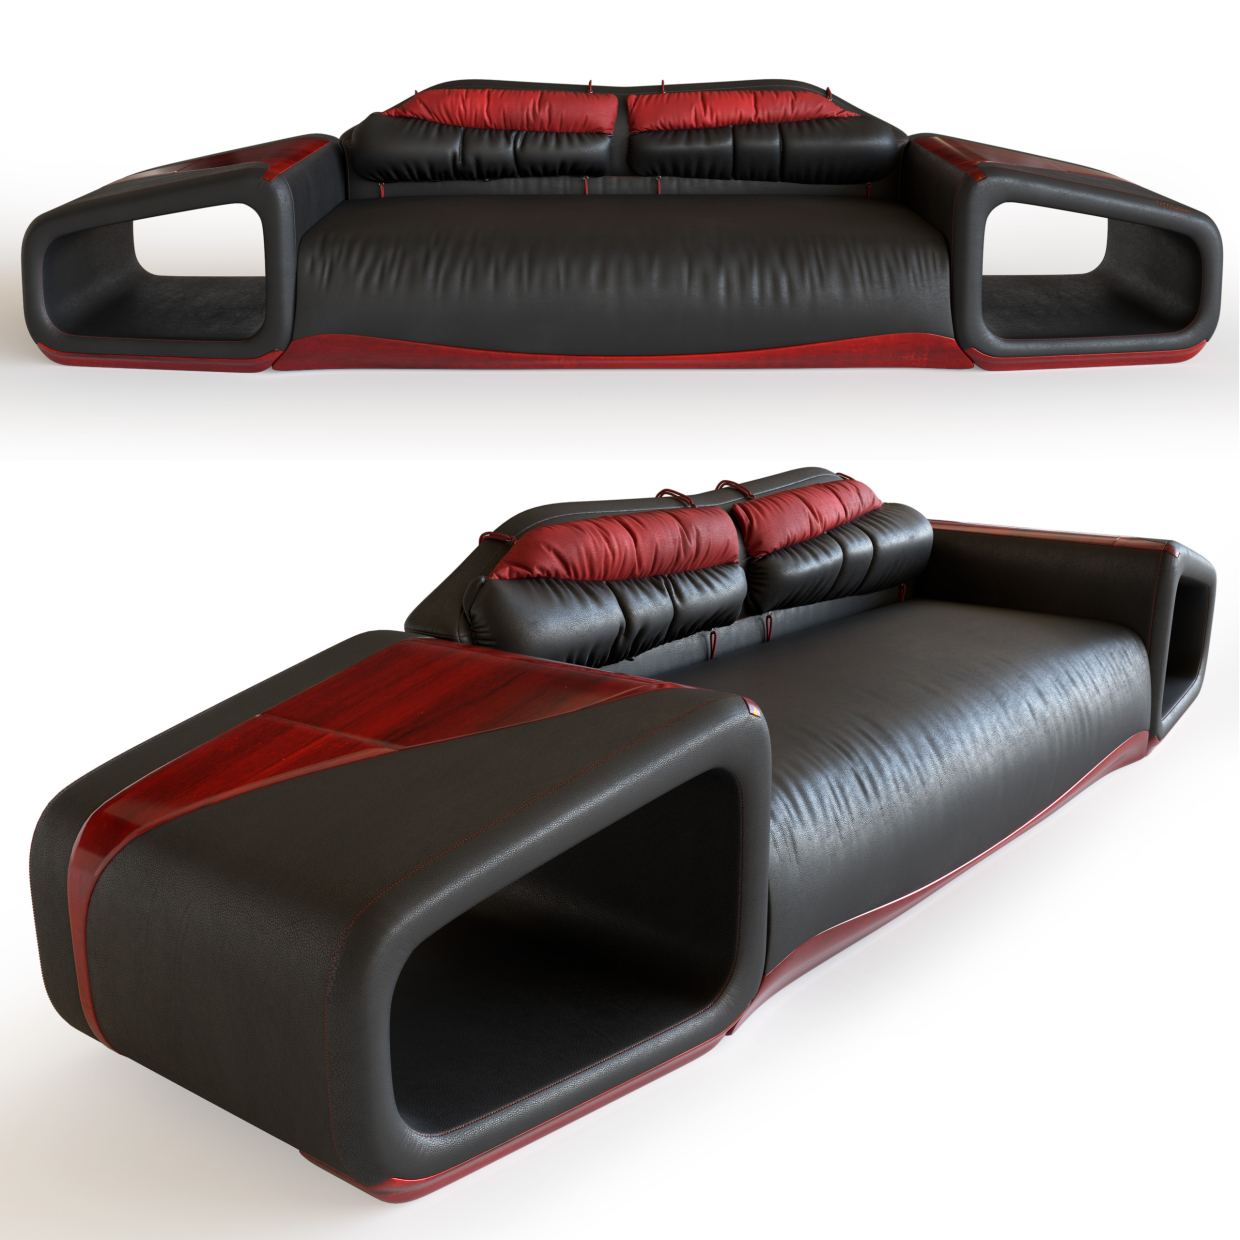 Graf sofa (my design) in 3d max Corona render 1.7 image